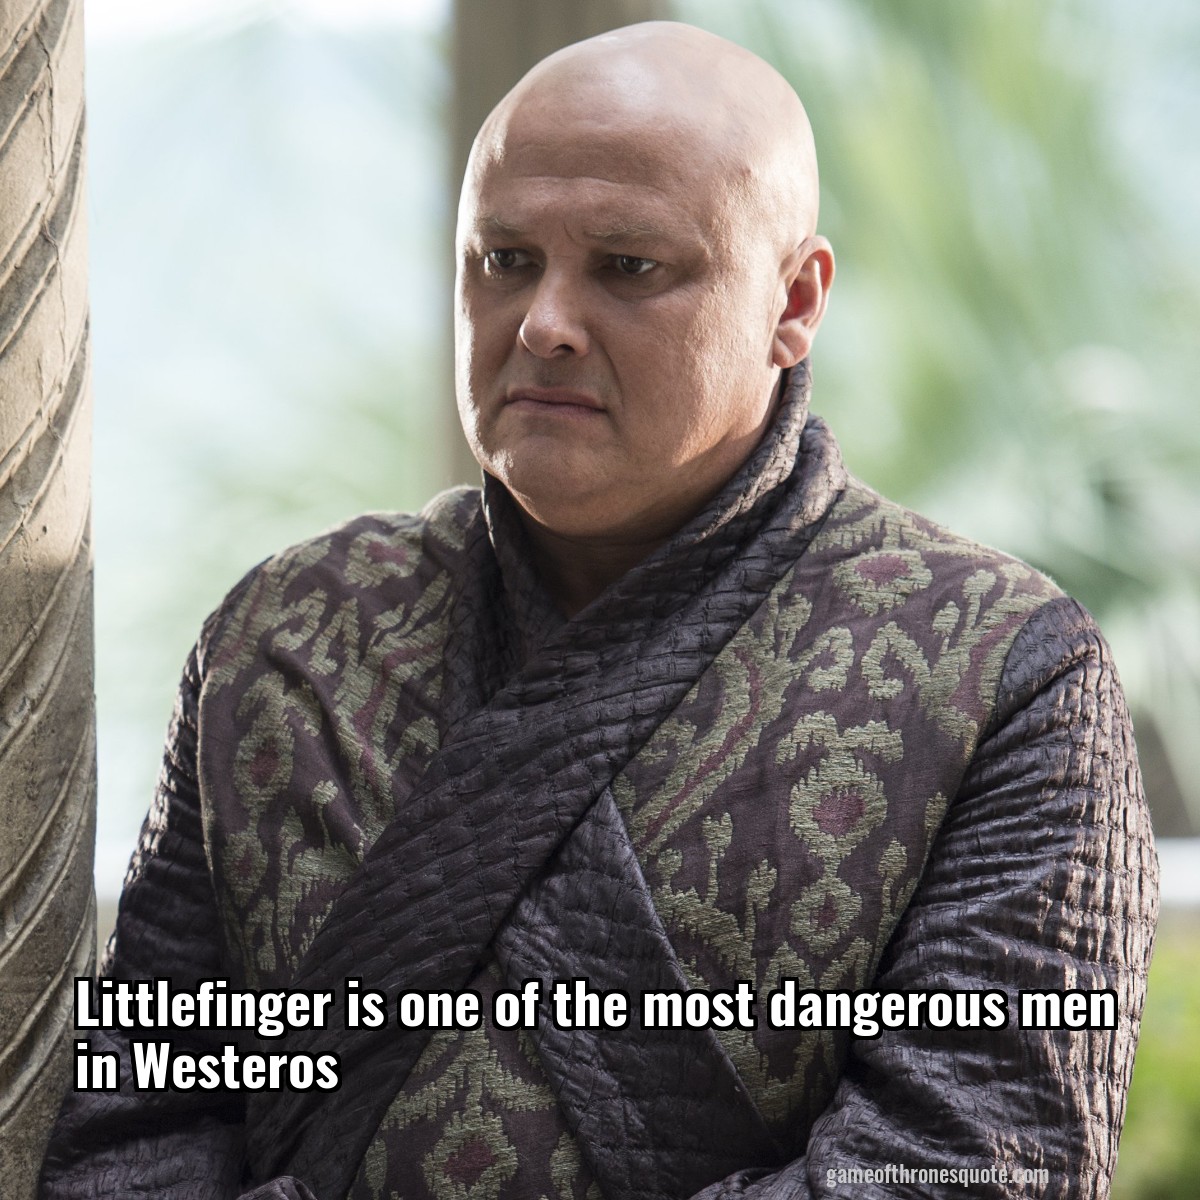 Littlefinger is one of the most dangerous men in Westeros